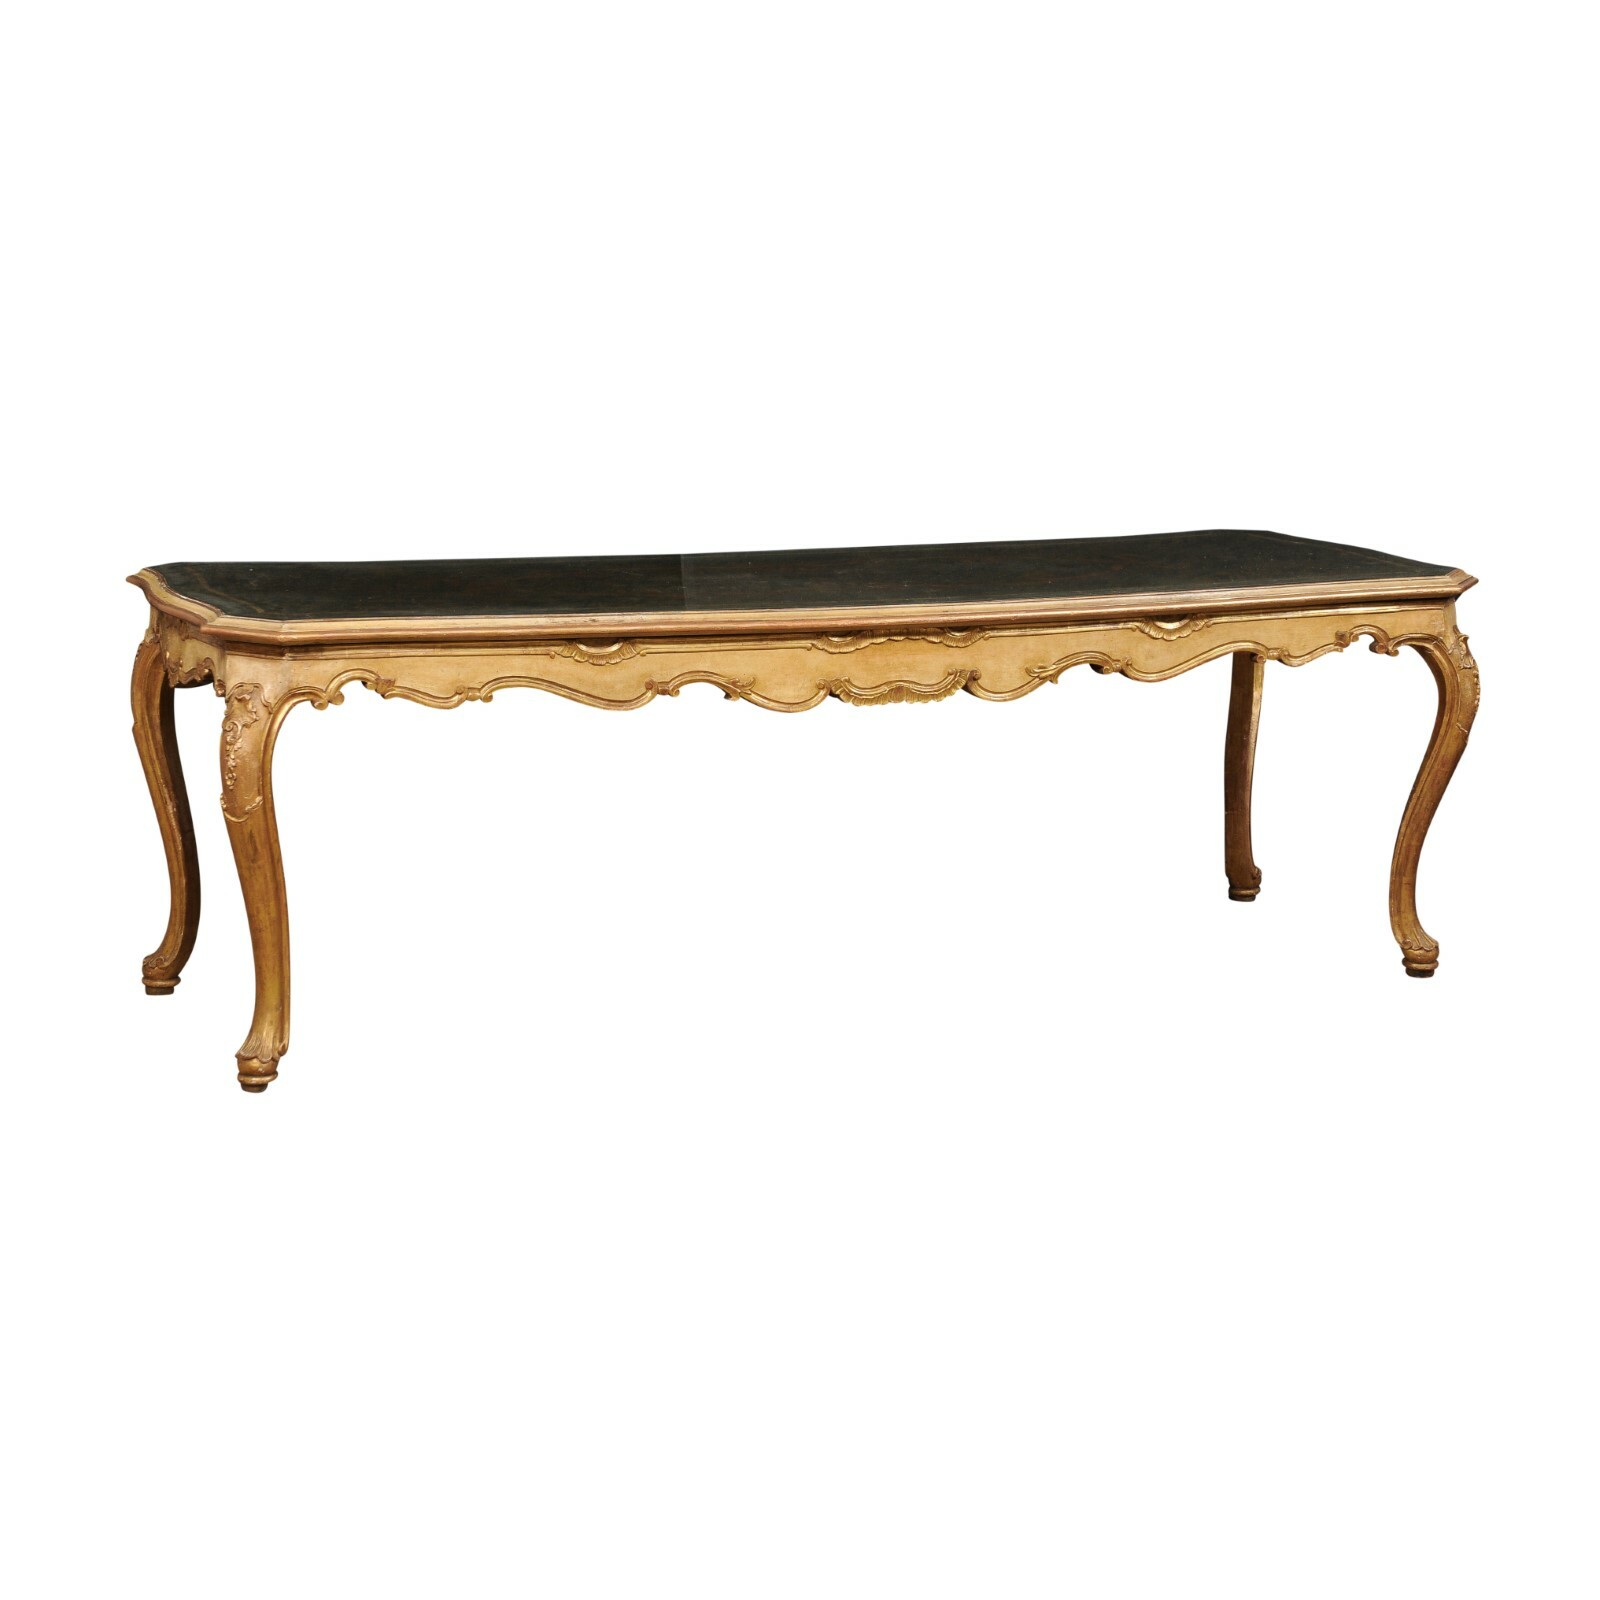 French Rococo Style Gilt Salon Table 19th C